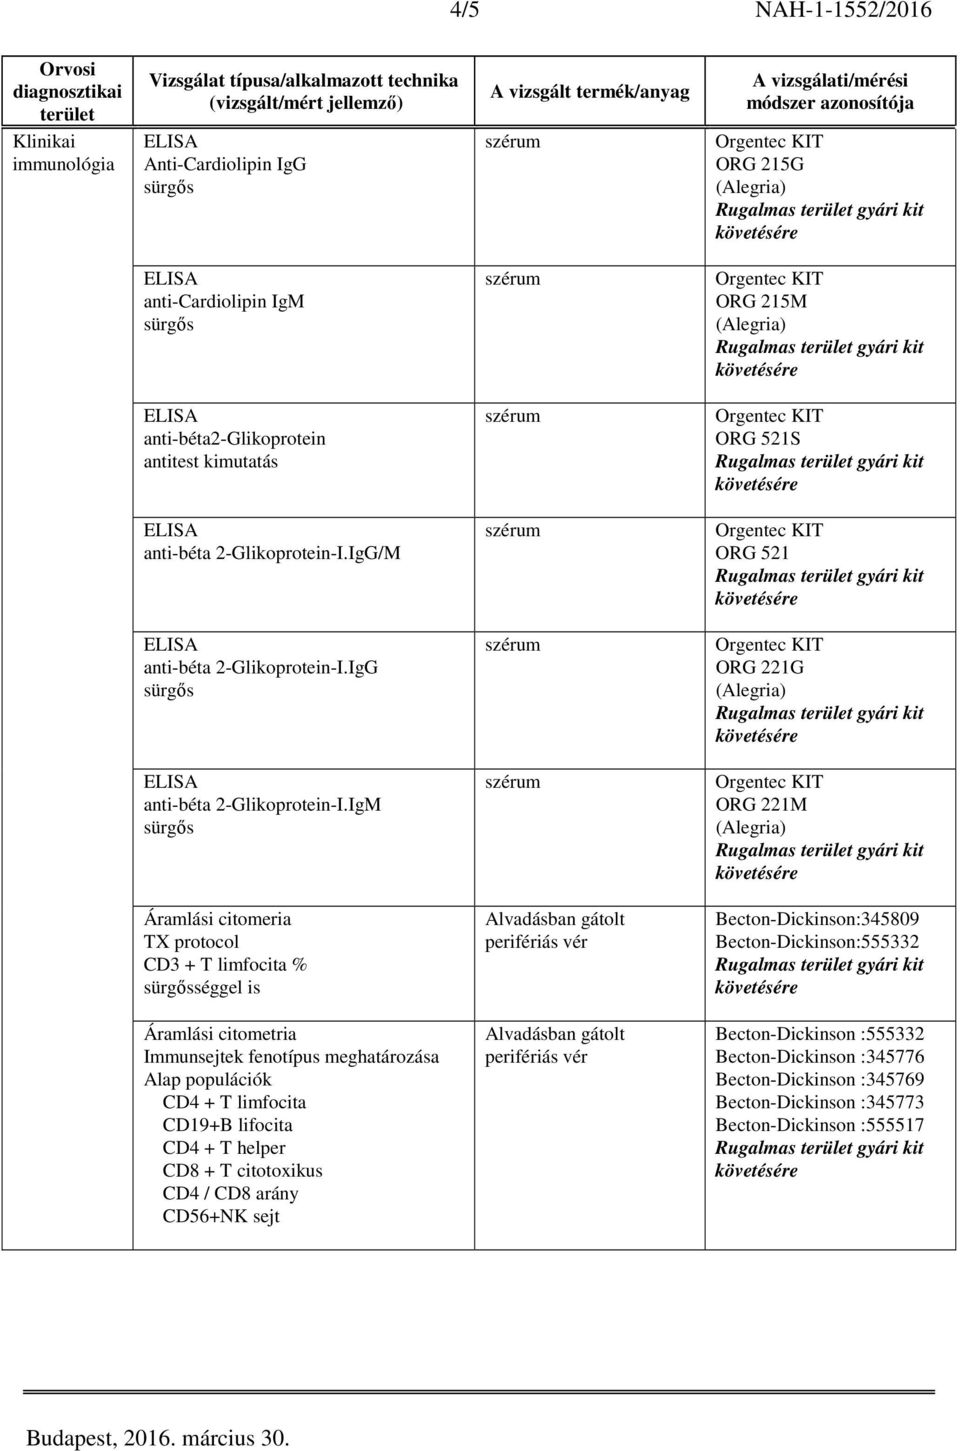 IgM ORG 221M Áramlási citomeria TX protocol CD3 + T limfocita % séggel is Becton-Dickinson:345809 Becton-Dickinson:555332 Áramlási citometria Immunsejtek